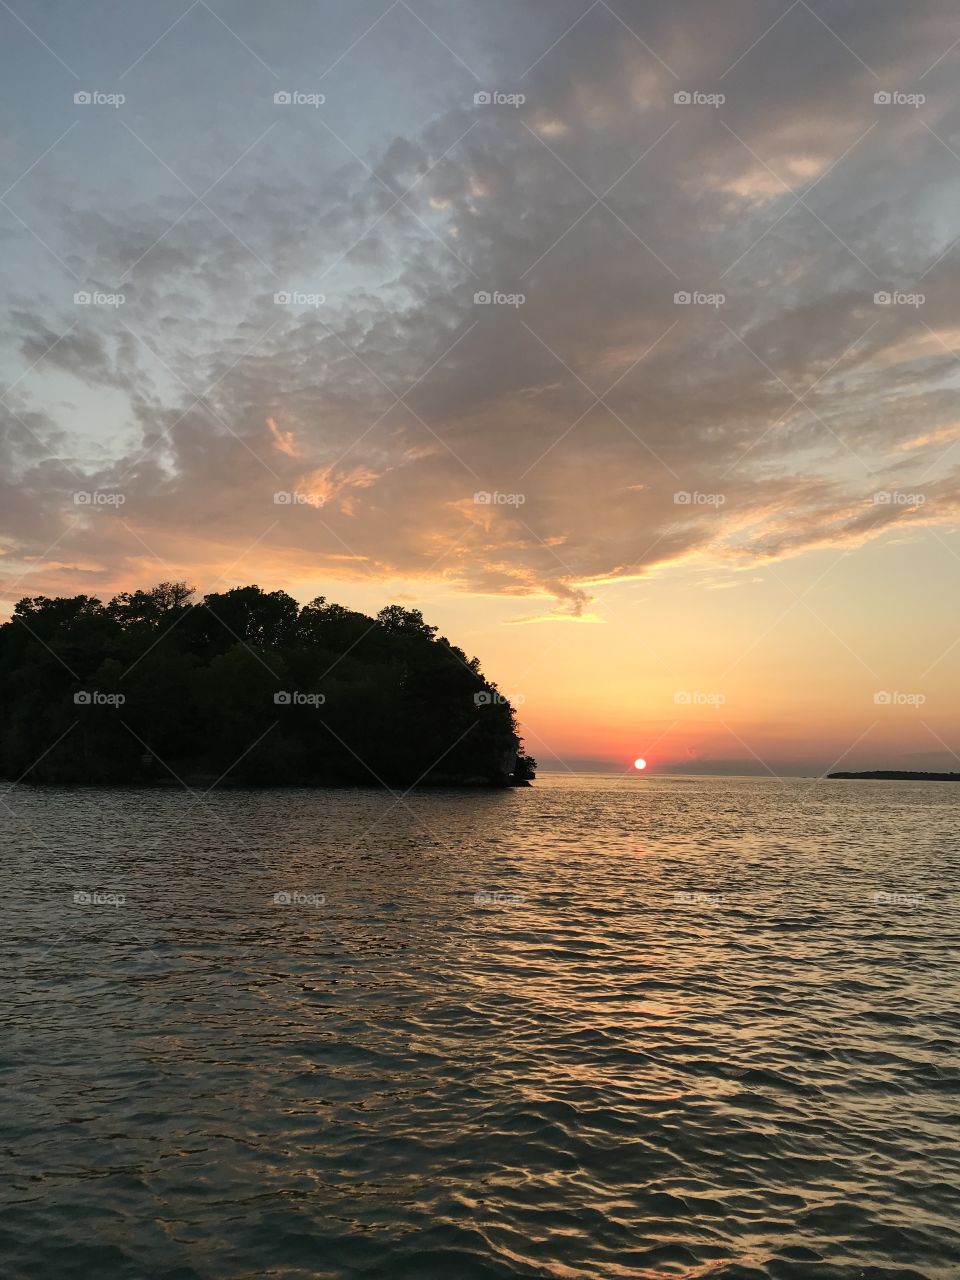 Mouse island sunset 